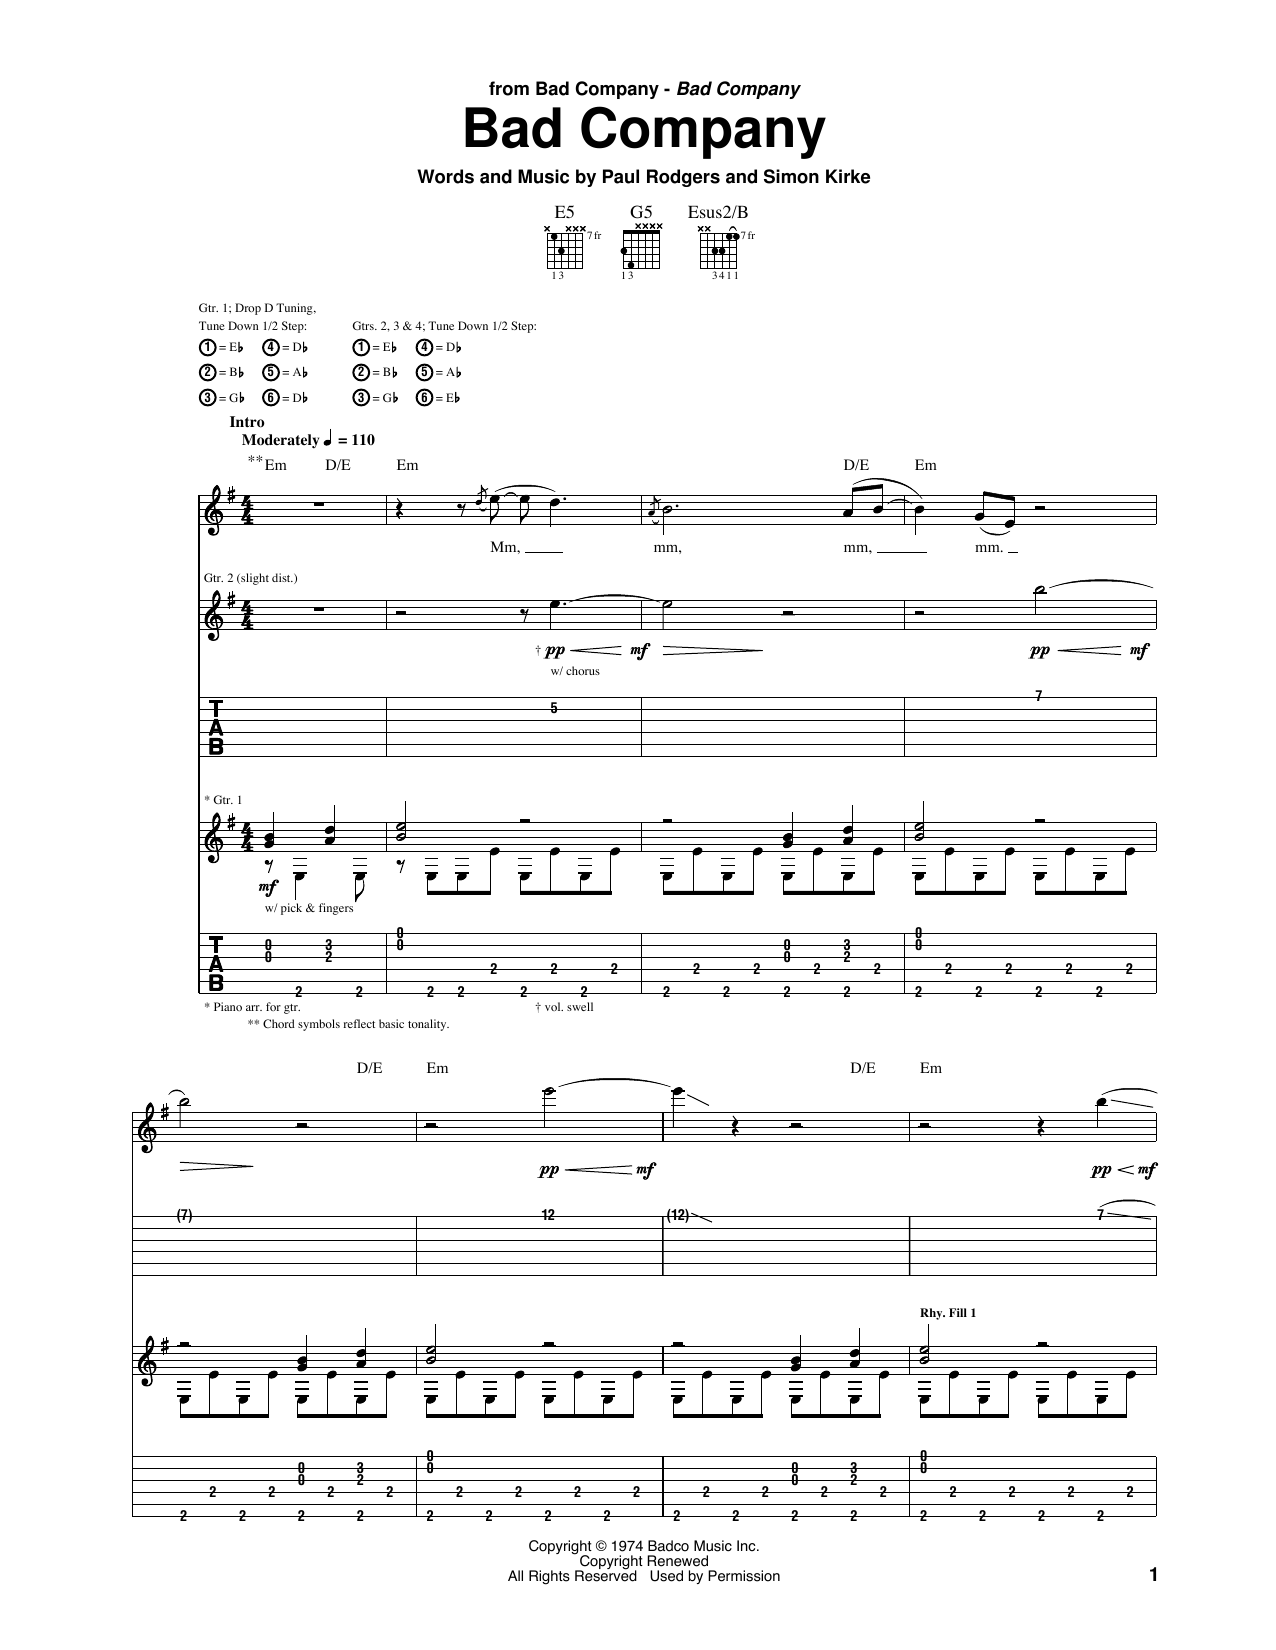 Bad Company Bad Company Sheet Music Notes & Chords for Guitar Tab - Download or Print PDF